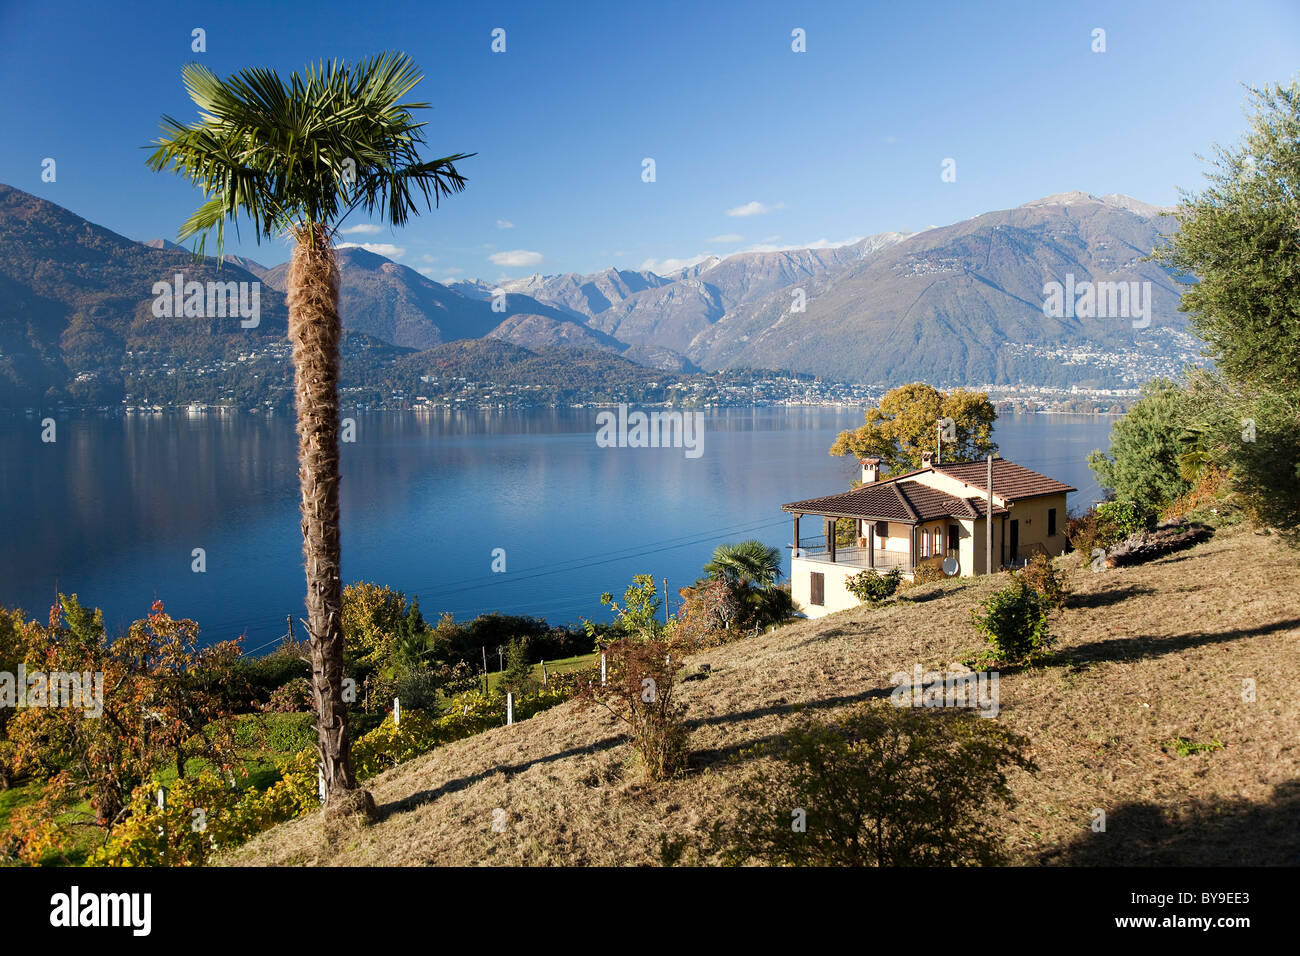 Idyllically situated holiday house on Lake Maggiore, Ranzo, Sant Abbondio, canton of Ticino, Switzerland, Europe Stock Photo